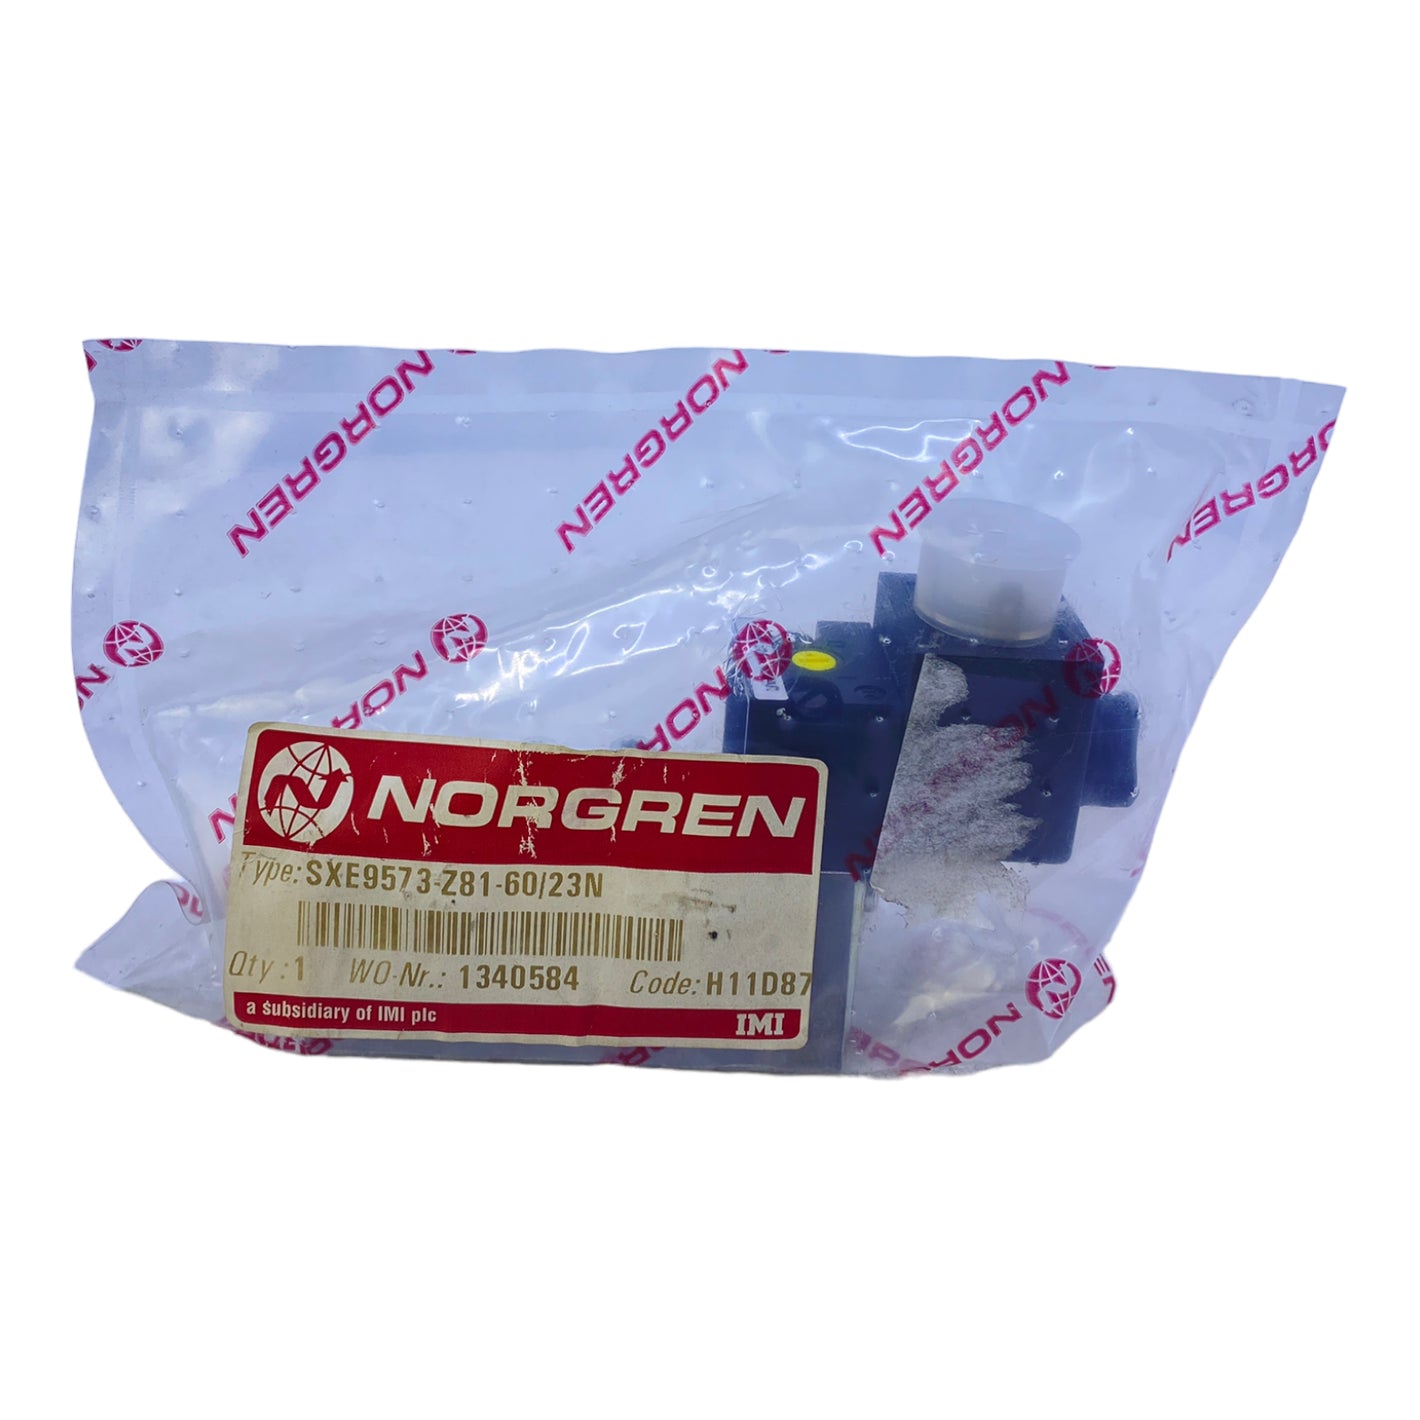 Norgren SXE9573-Z81-60/23N solenoid valve pneumatic valve 